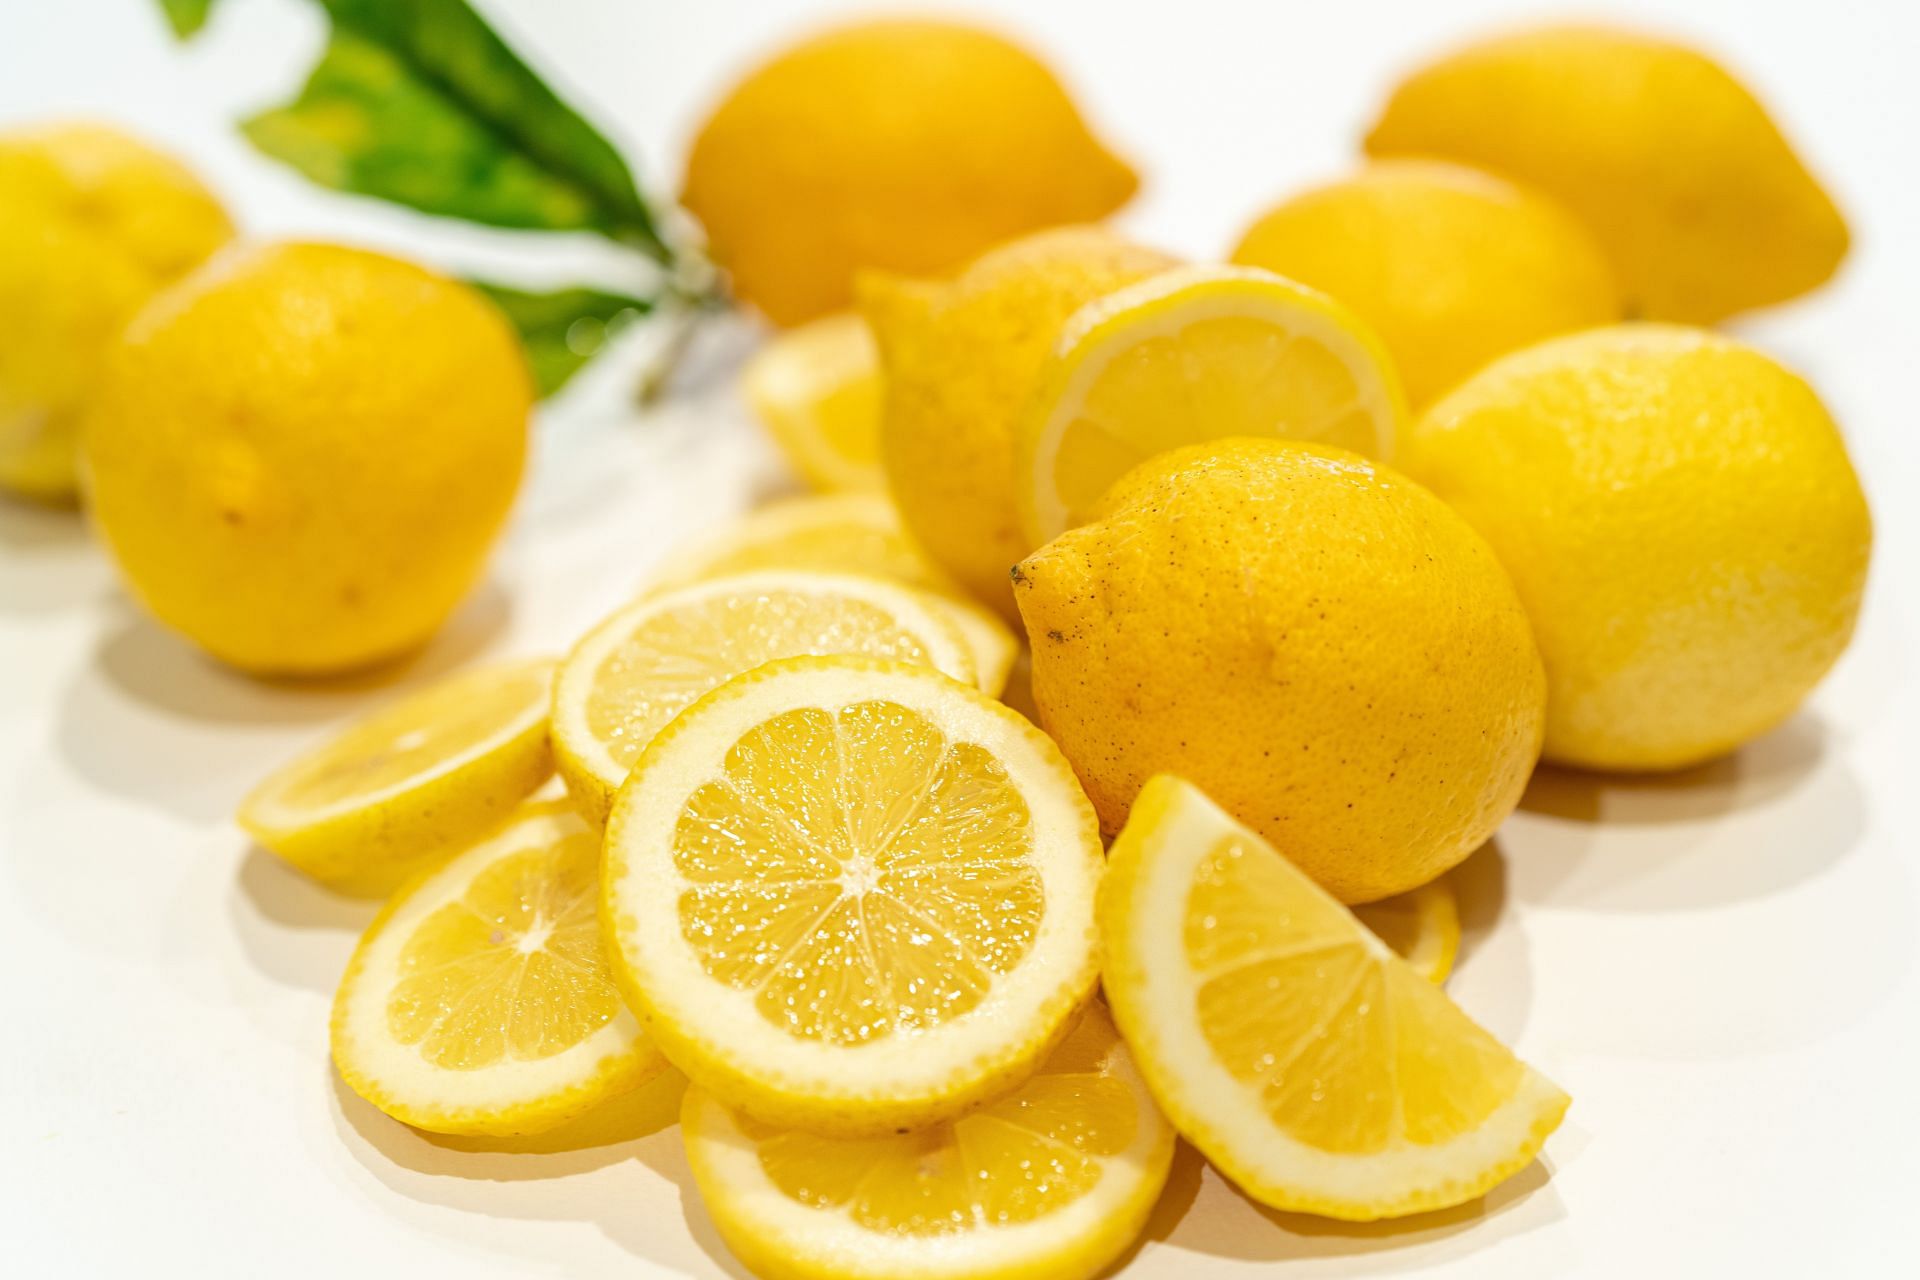 Lemons have antioxidants (Image via Unsplash/eggbank)